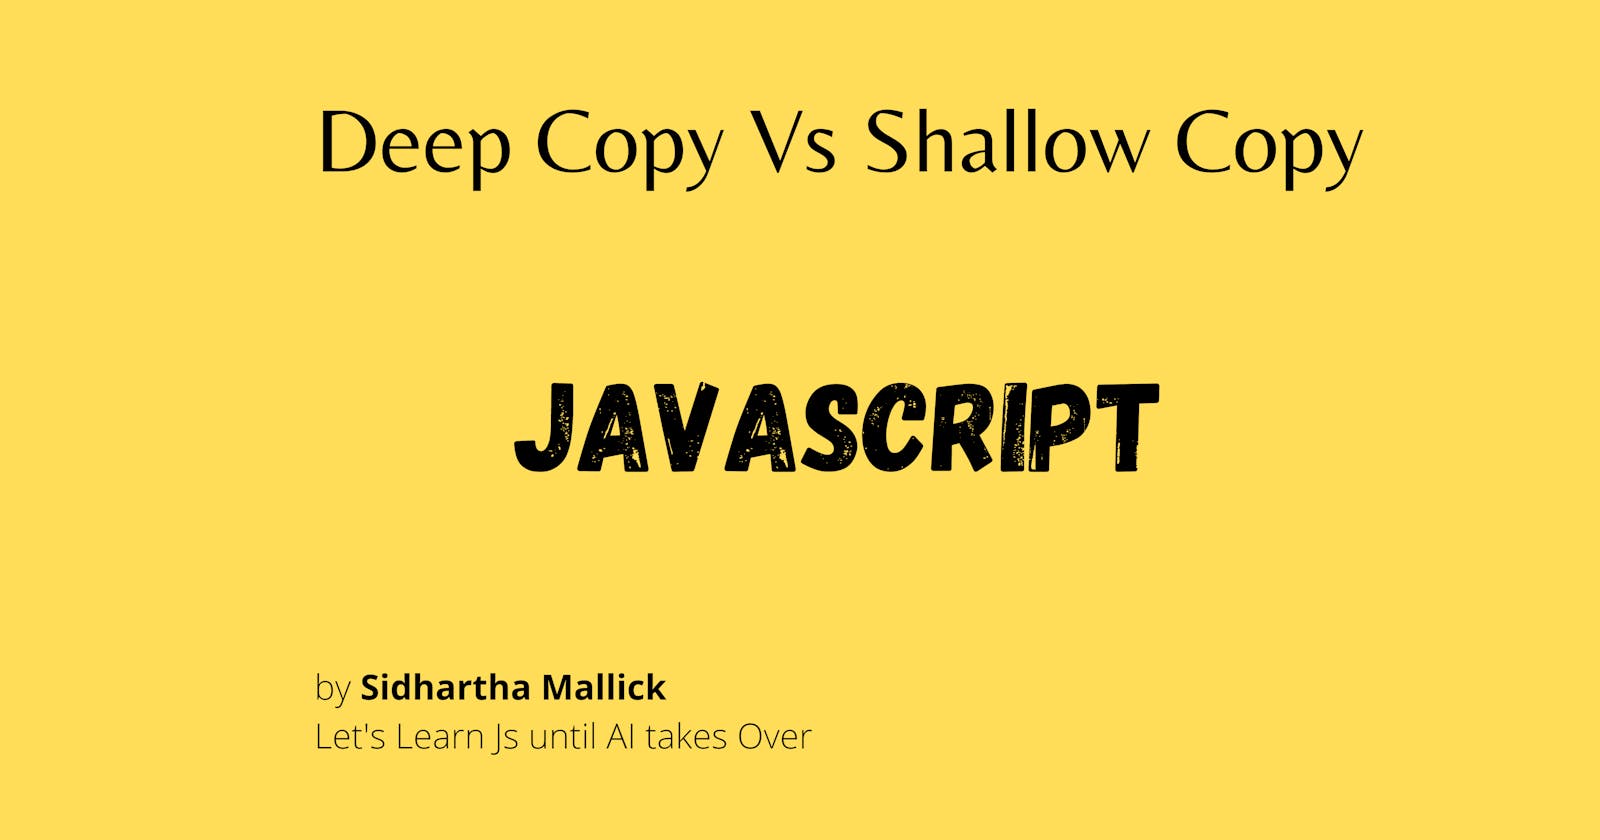 Deep Copy vs Shallow Copy in JavaScript